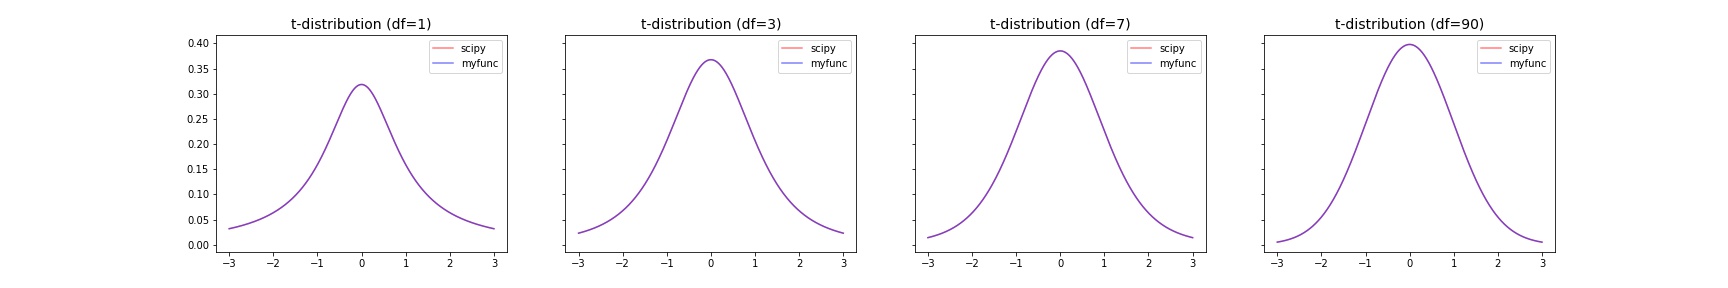 _images/statistics.distributions.t.jpg